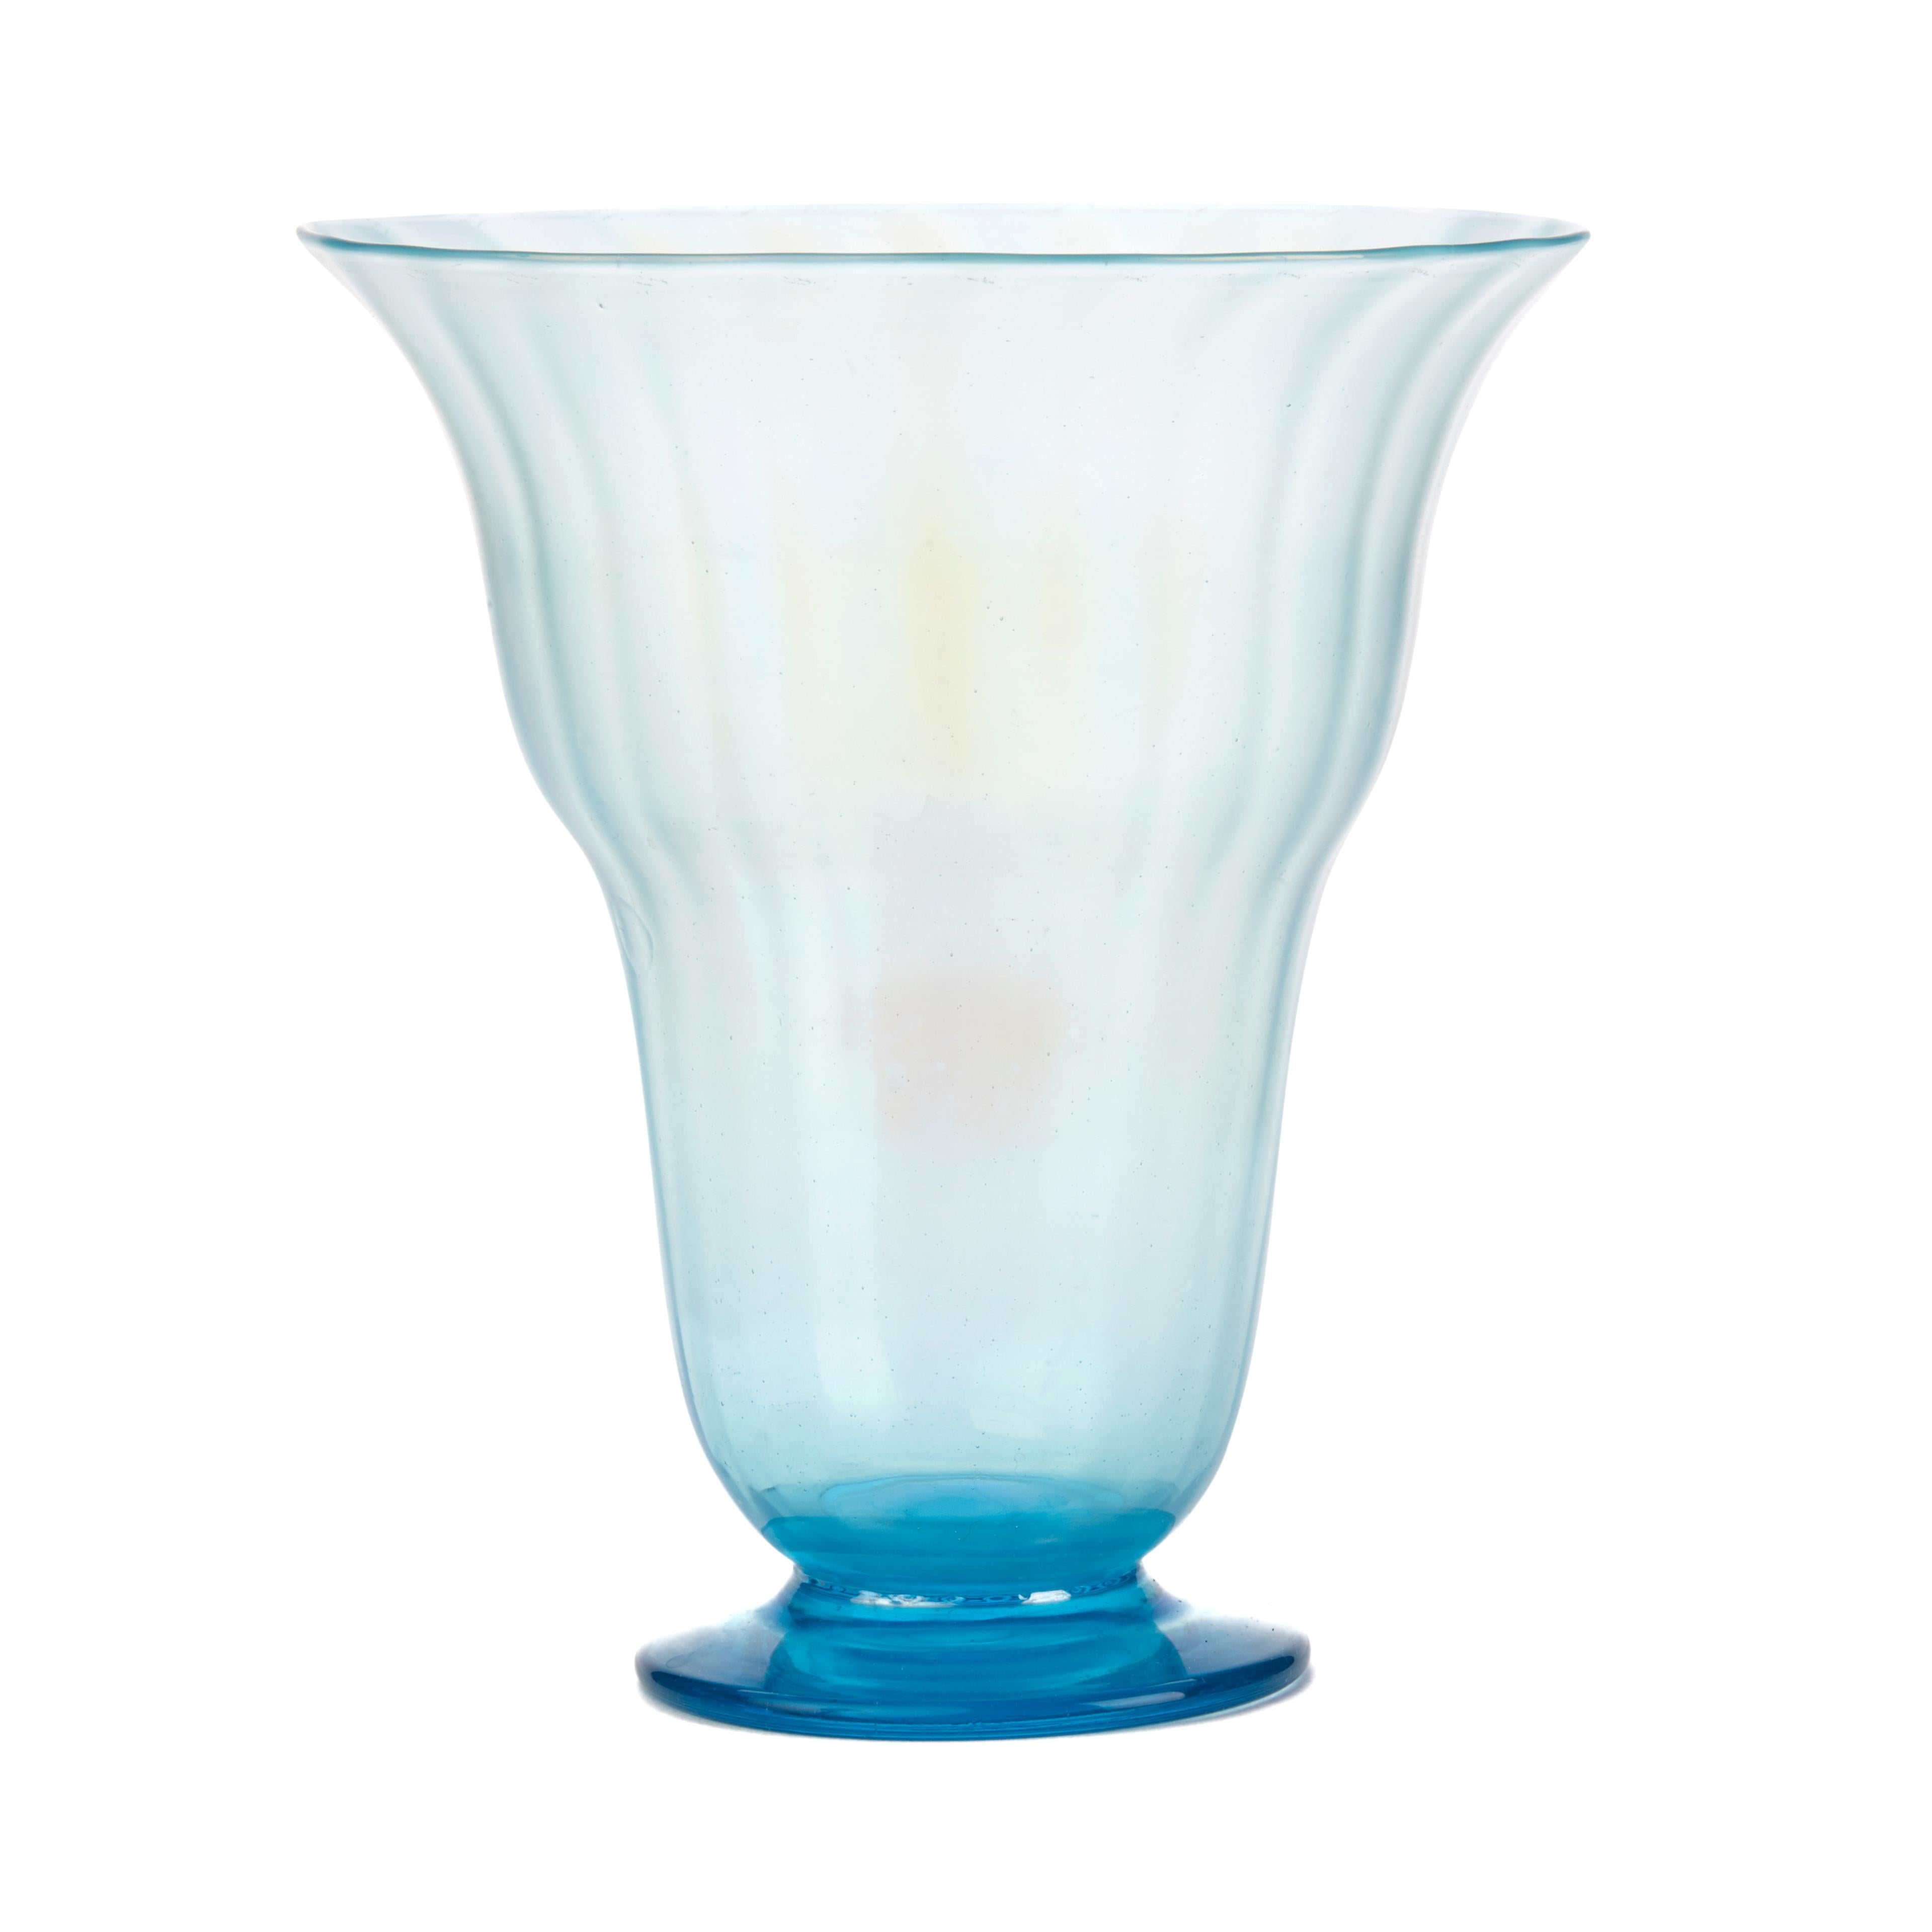 English John Walsh Walsh Large Iridescent Moonbeam Art Glass Vase, circa 1929